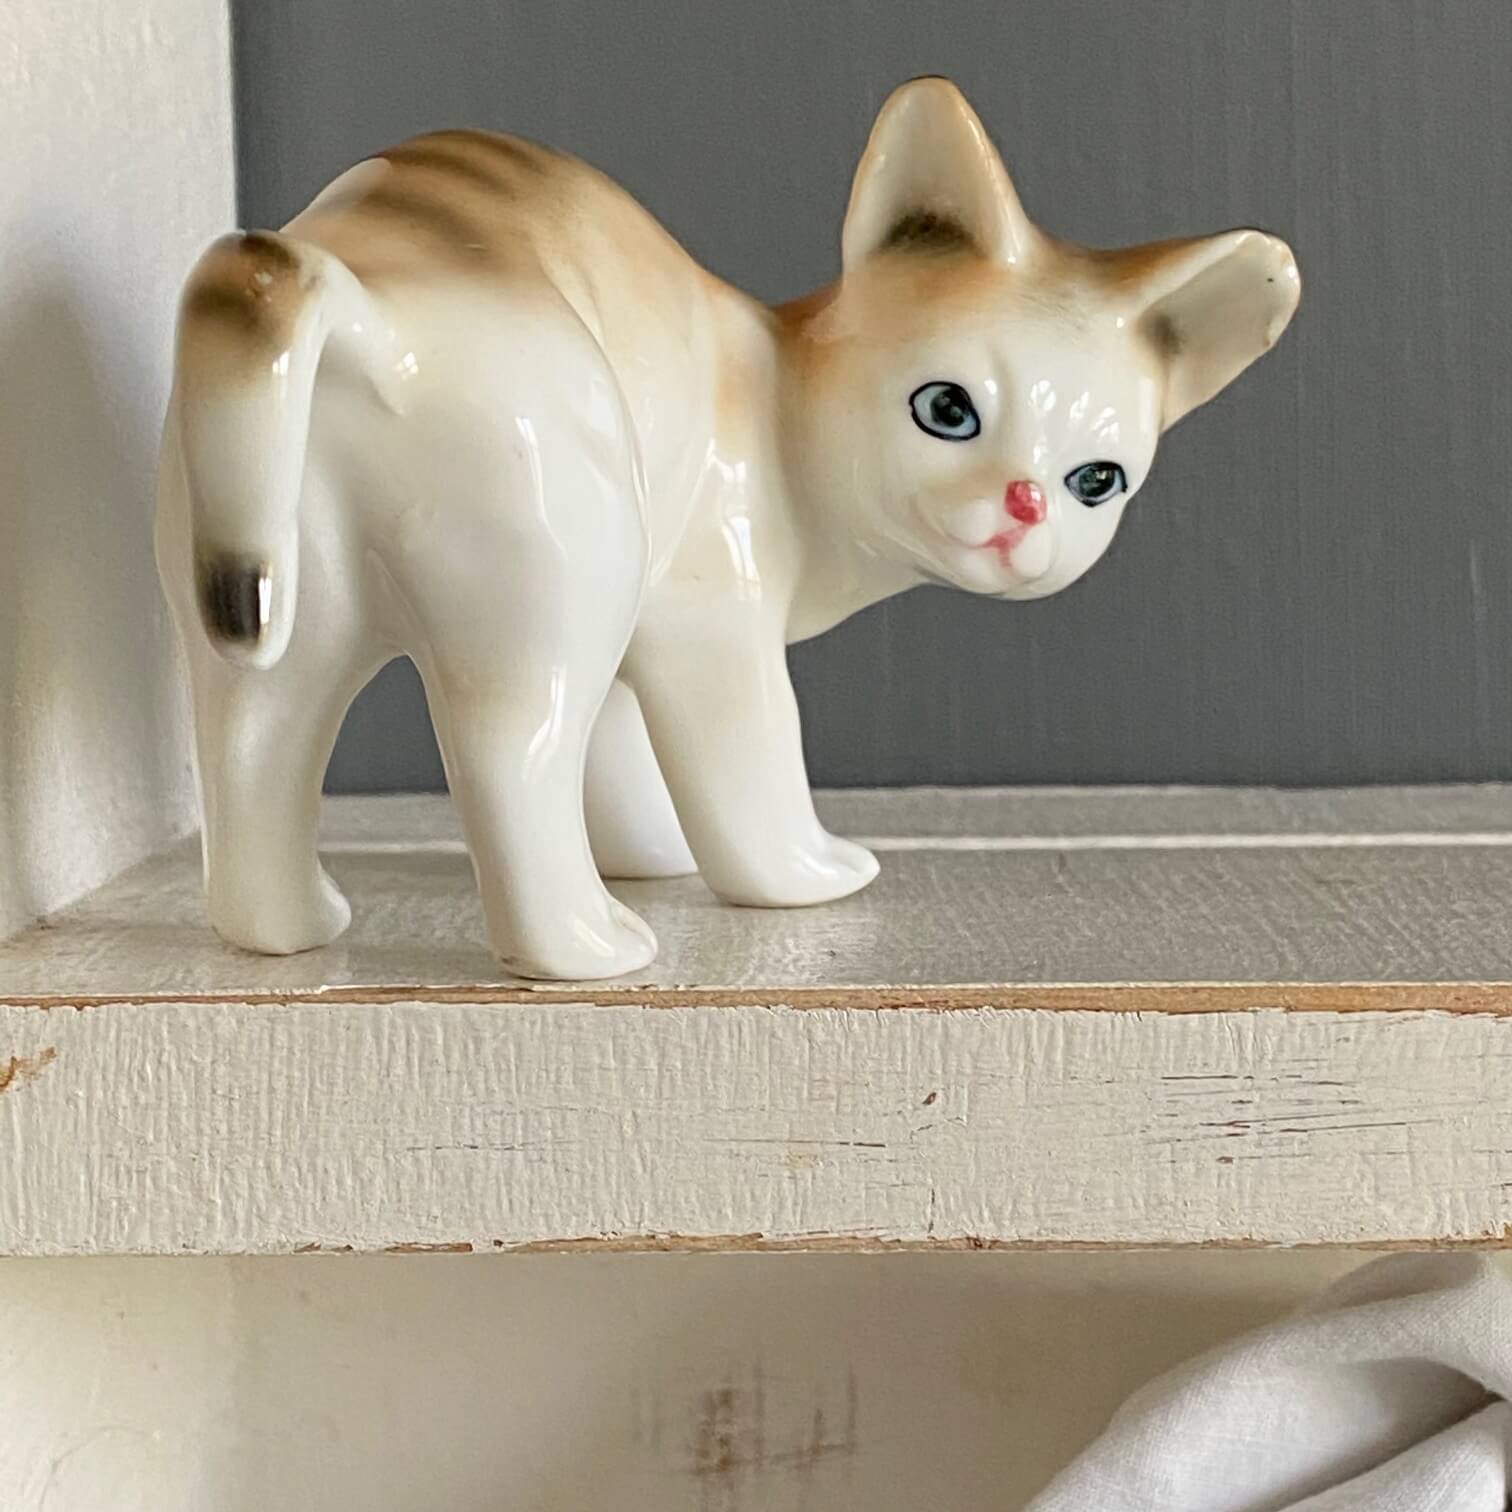 Vintage Ceramic Cat Figurine -  Kitten on the Counter - Midcentury Kitchen Whimsy